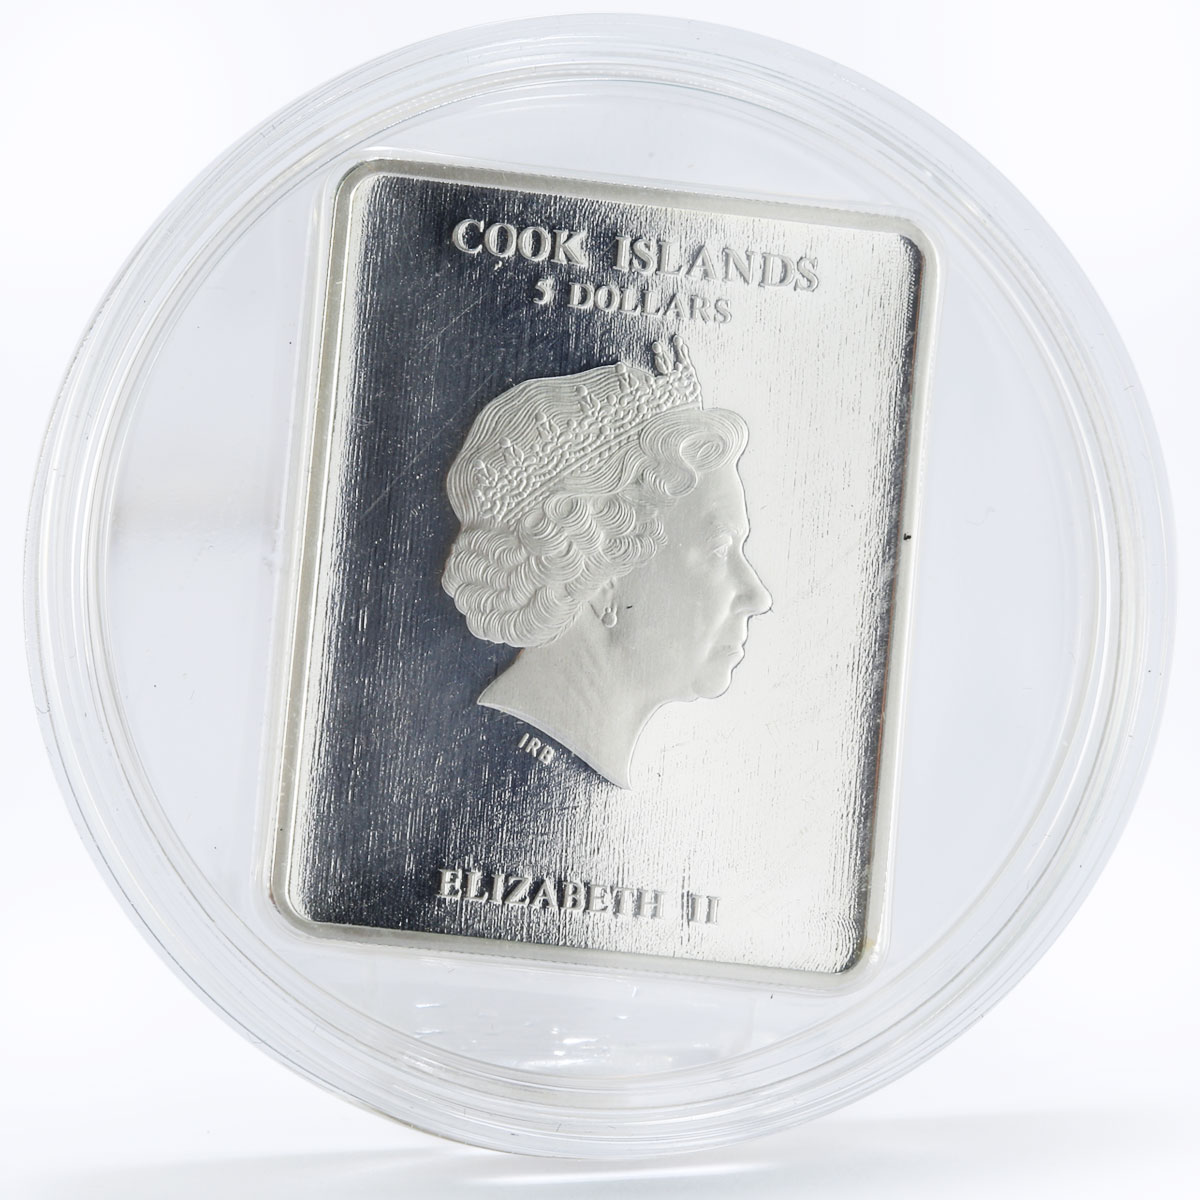 Cook Islands 5 dollars Patron Saints series St. Olga silver coin 2011